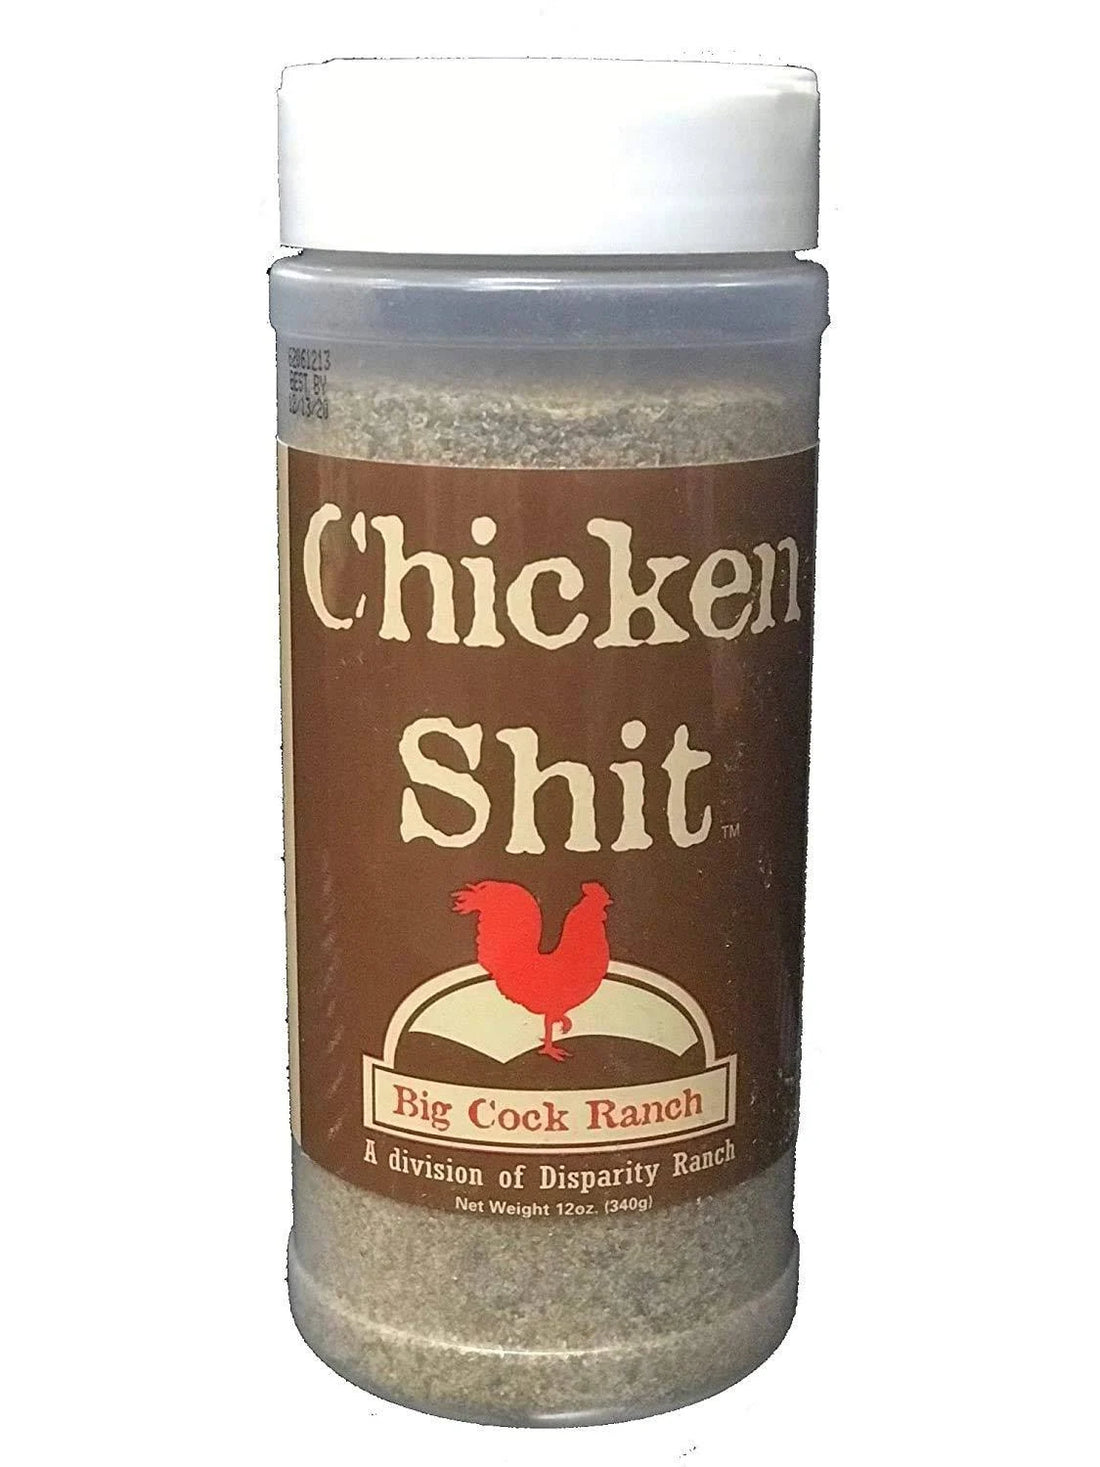 Chicken Shit Seasoning